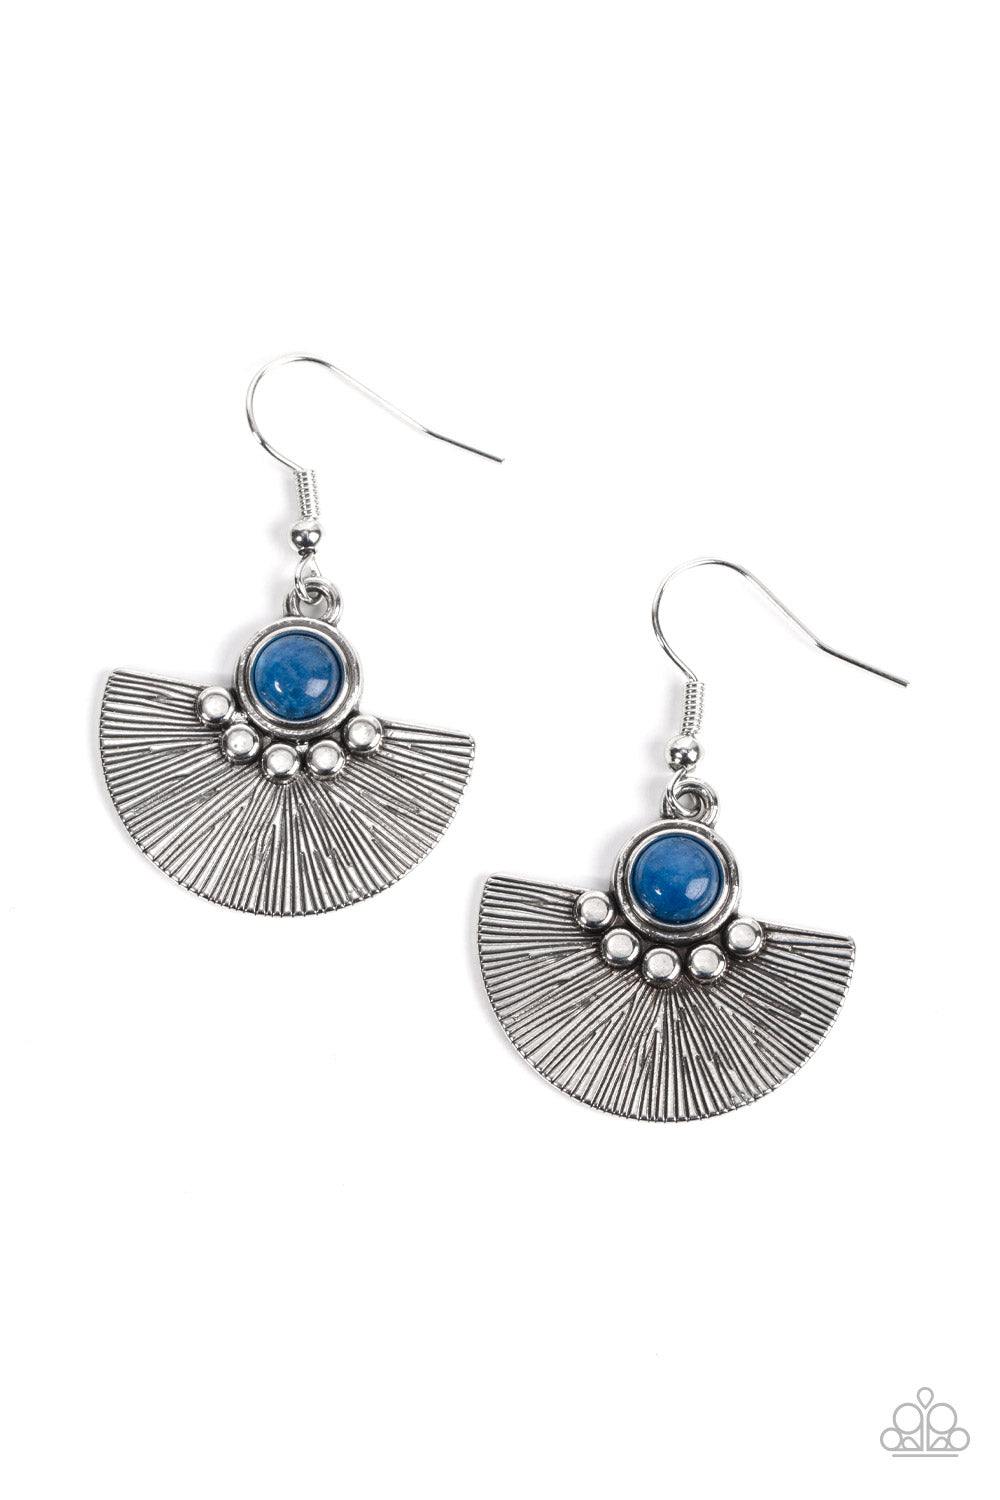 Manifesting Magic - Blue Bead, Silver Stud, & Textured 1/2 Moon Paparazzi Earrings